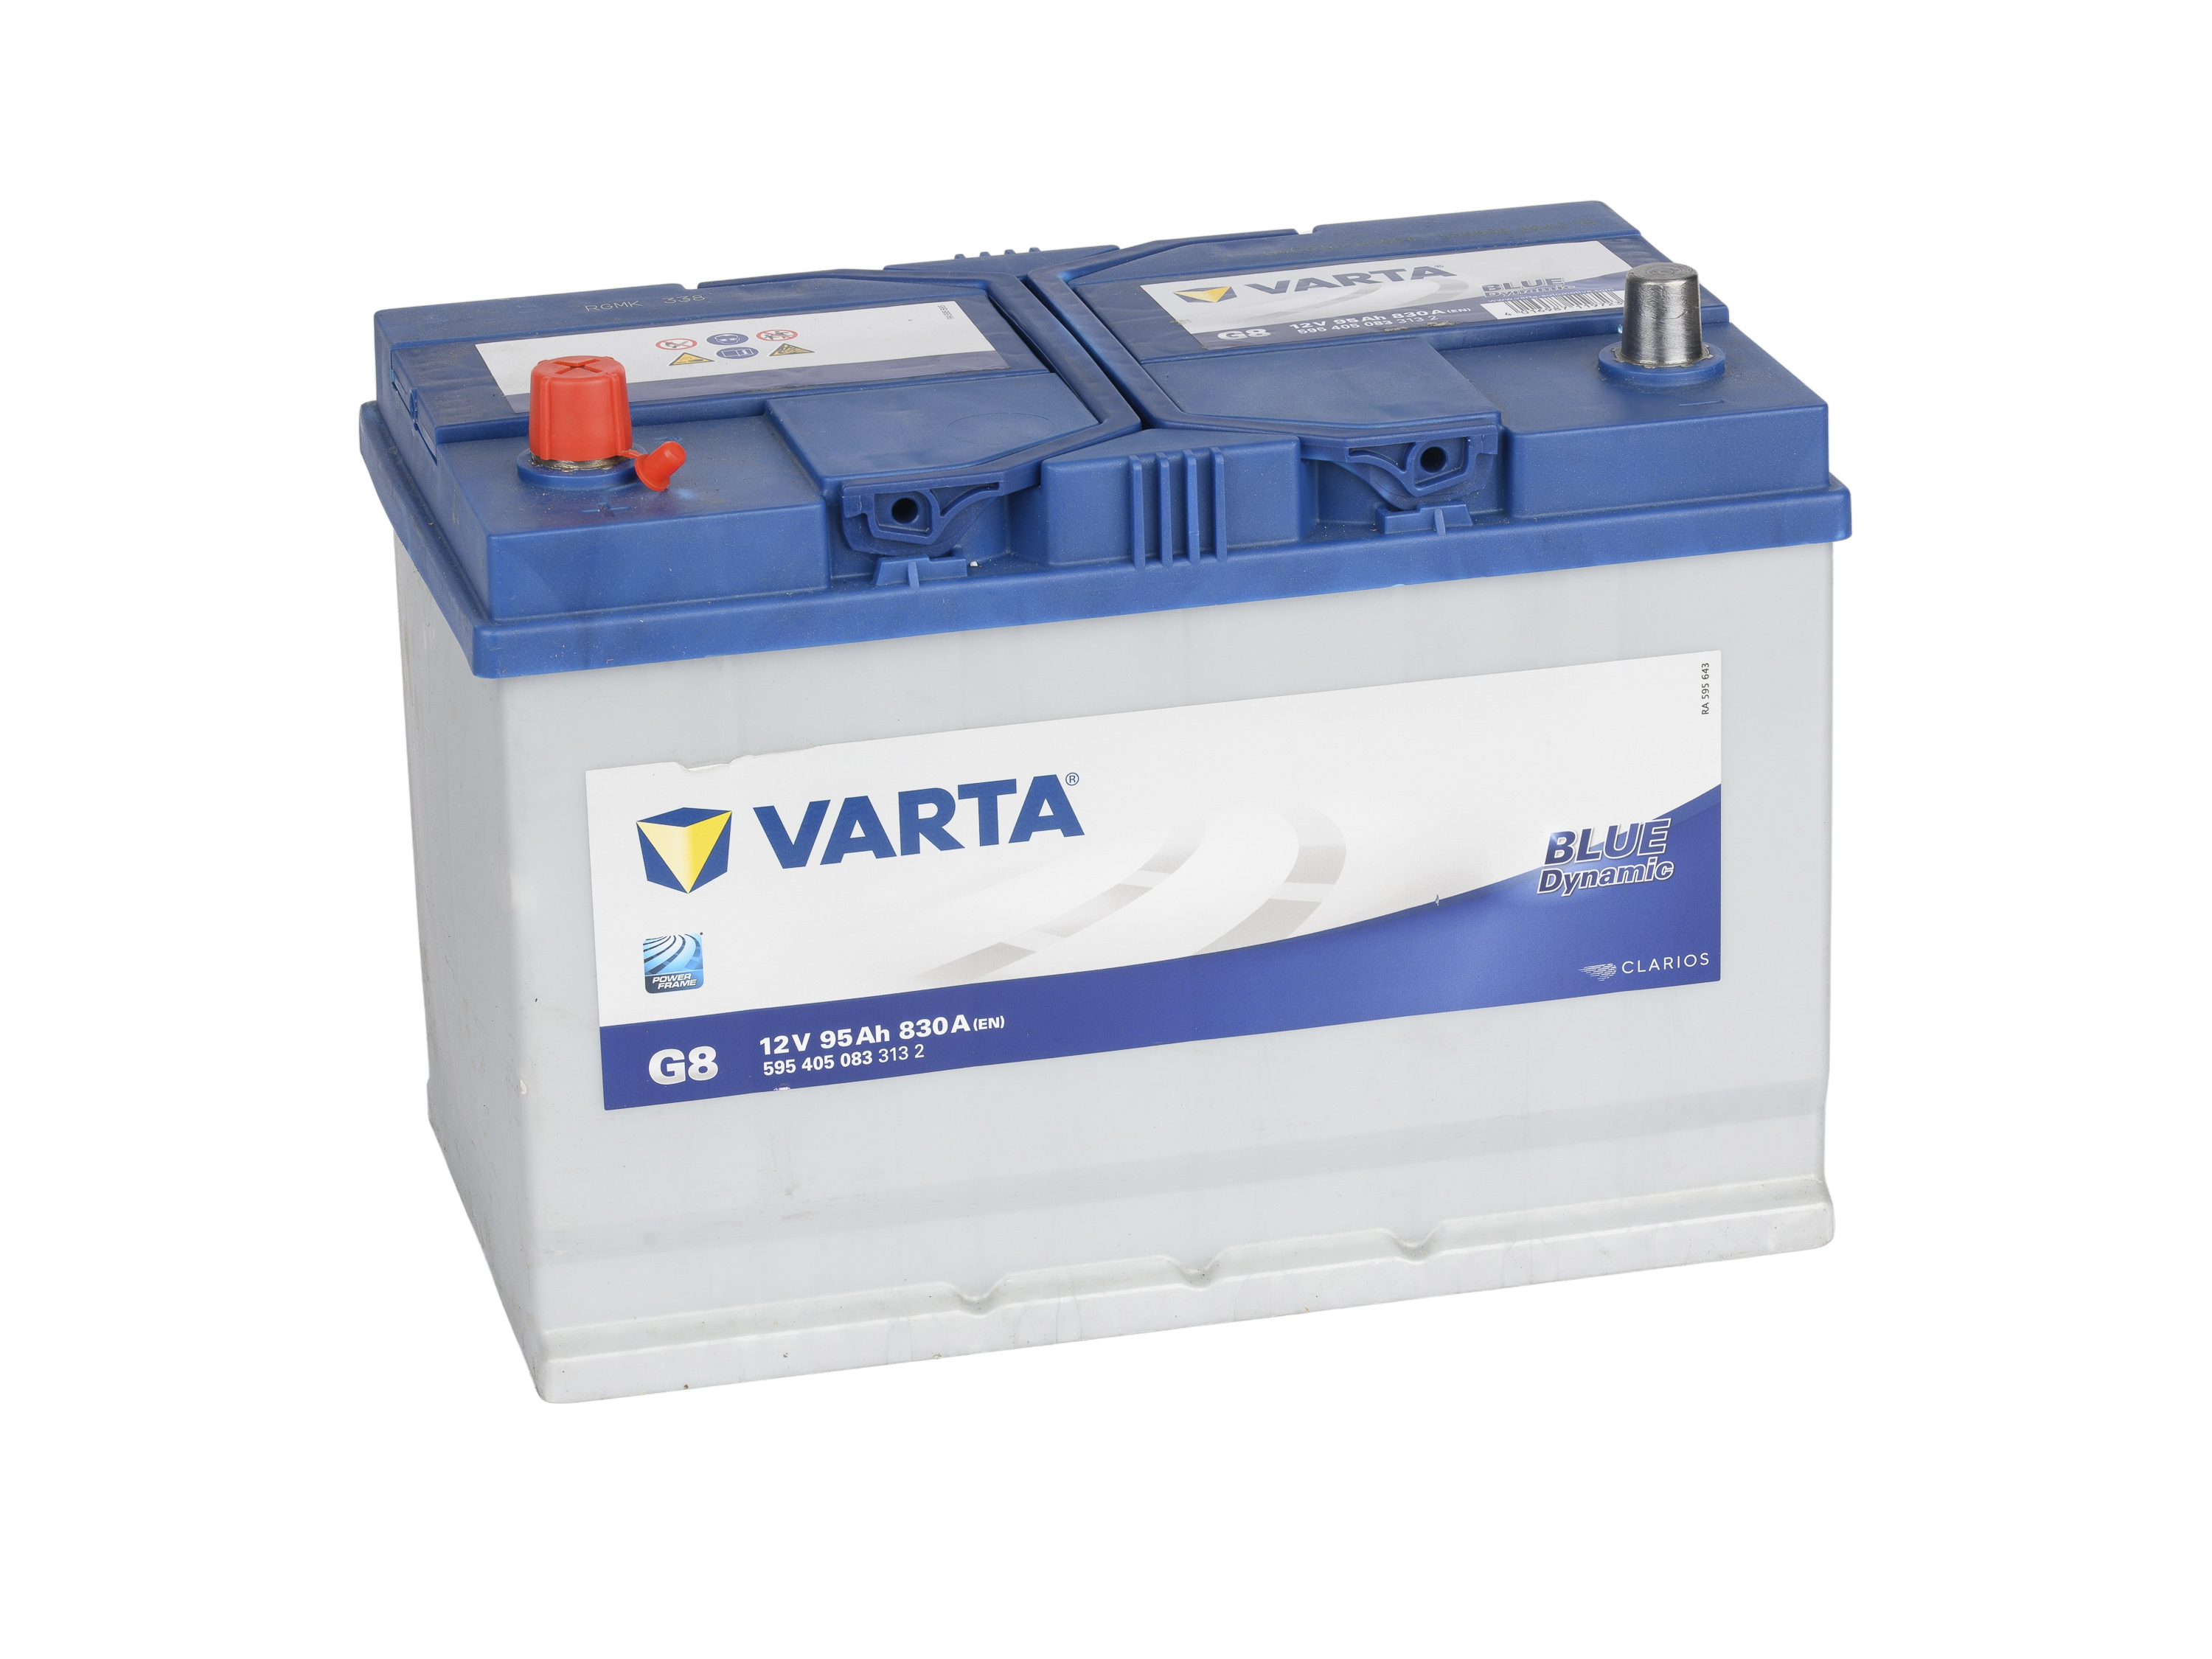 VARTA Battery Blur Dynamic G8 595.405.083 12V/95AH